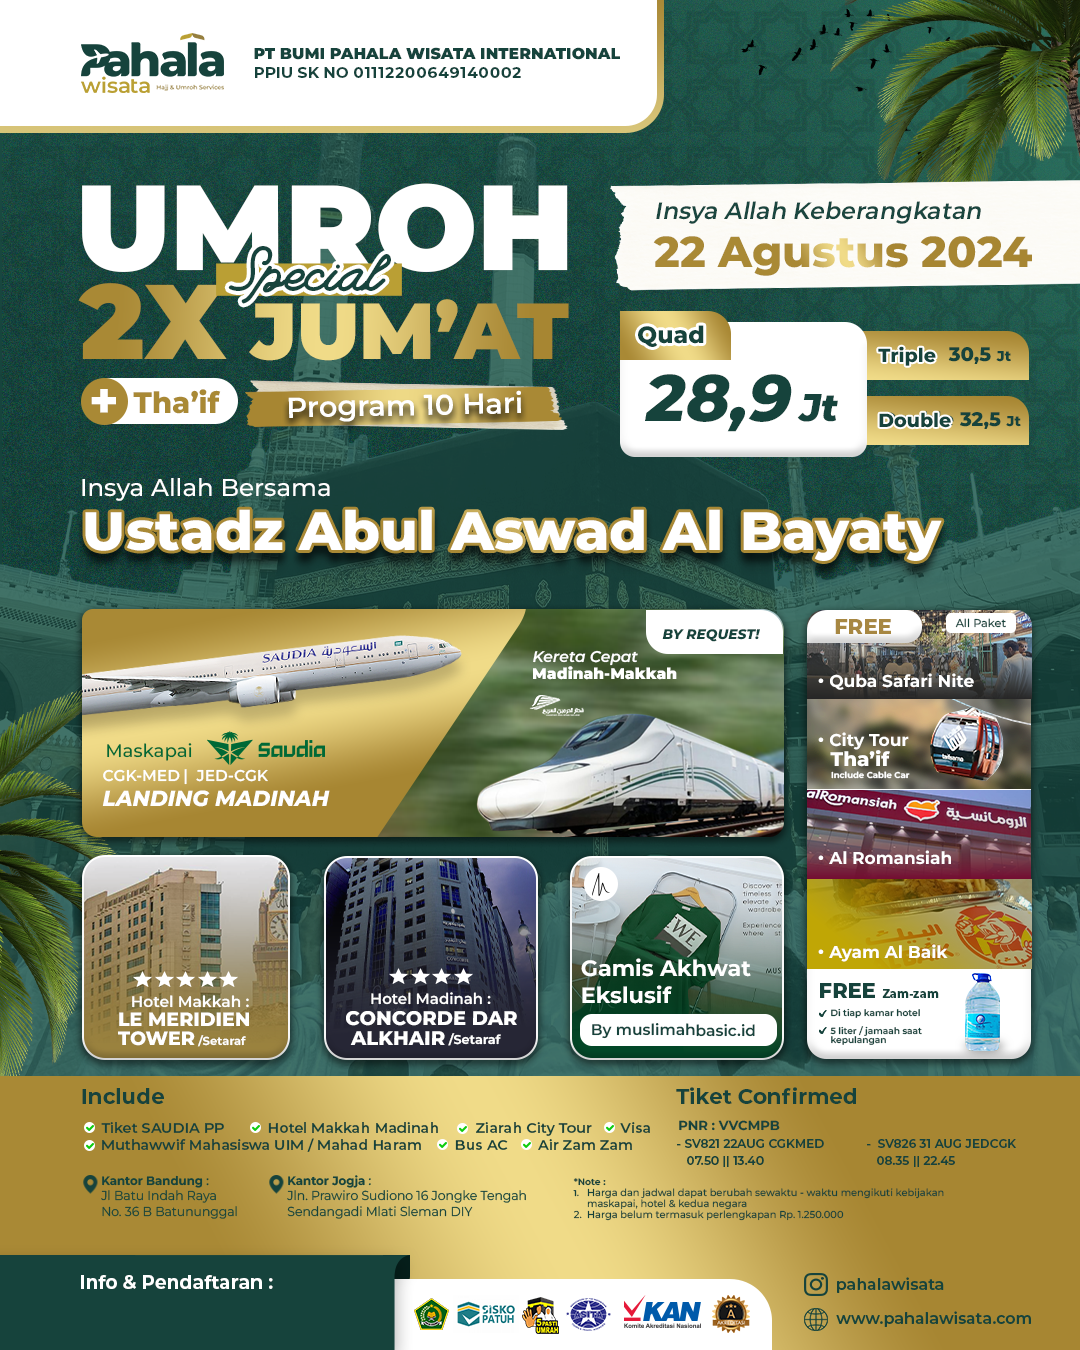 Umroh Special 2x Jumat + Free Thaif